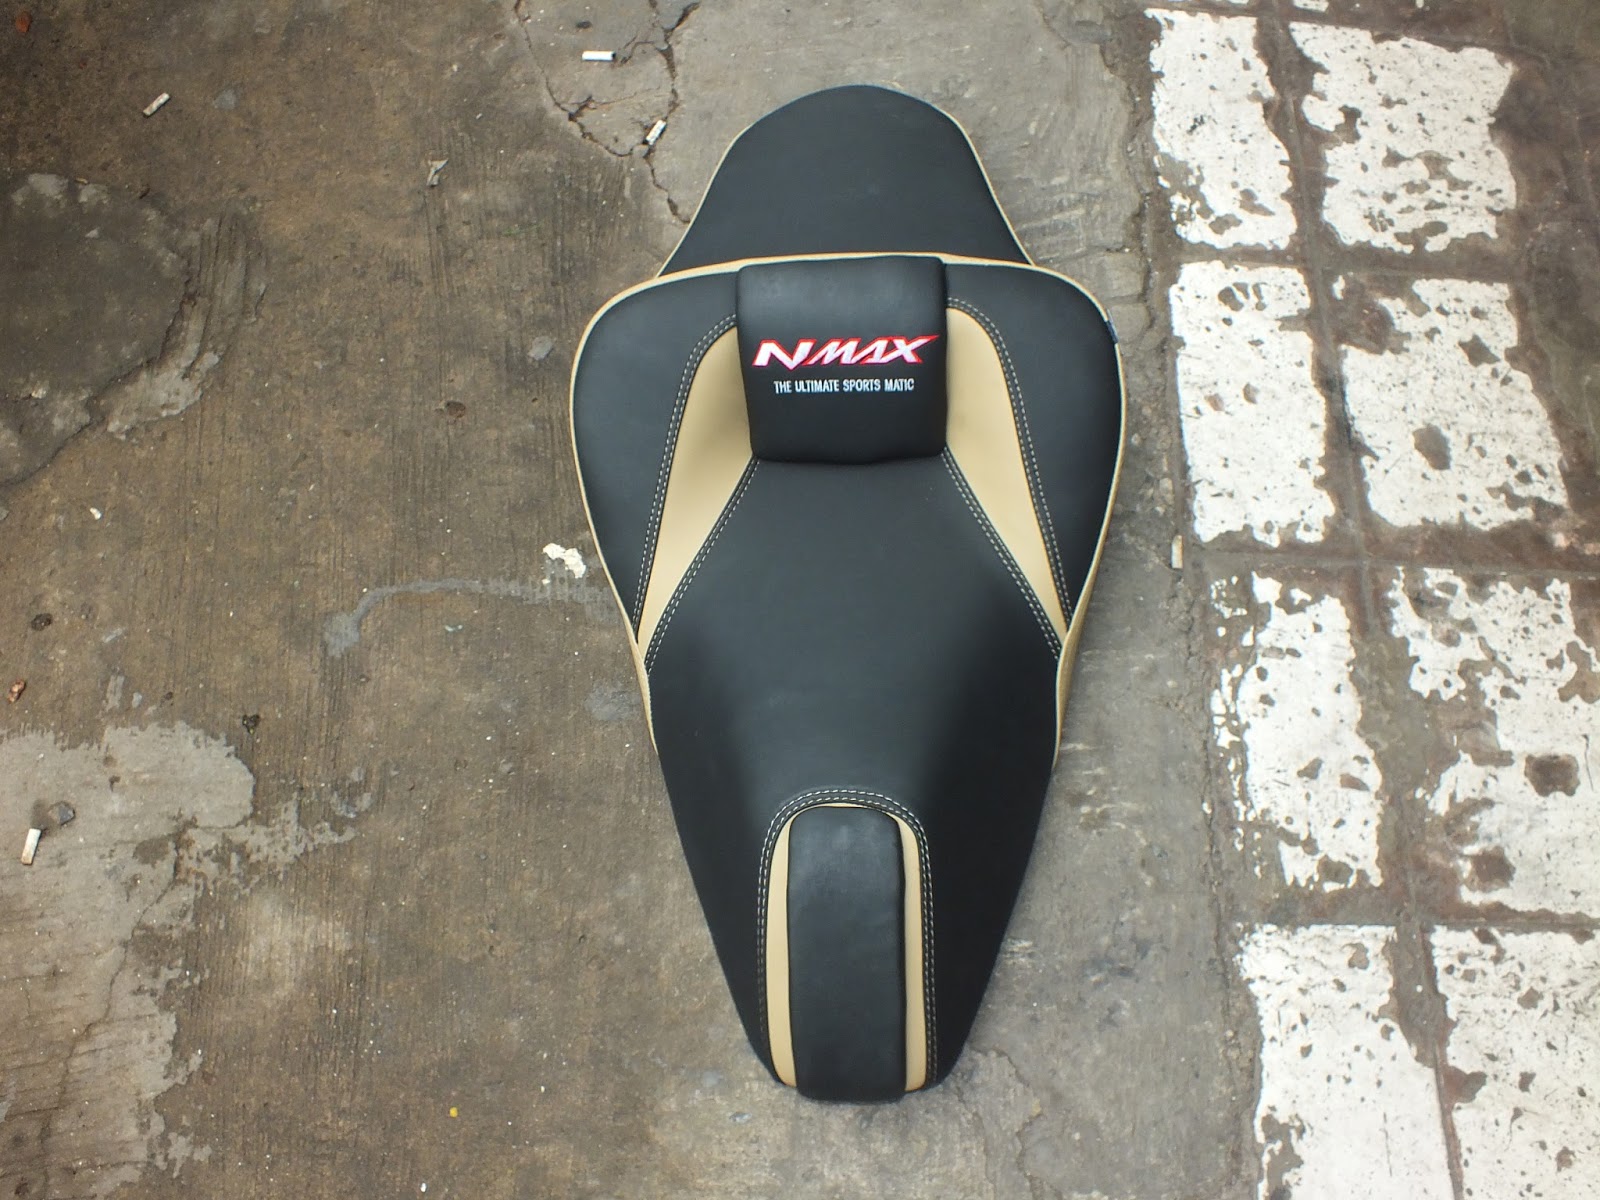 50 Modifikasi Yamaha Nmax Warna Abu Abu Modifikasi Yamah 